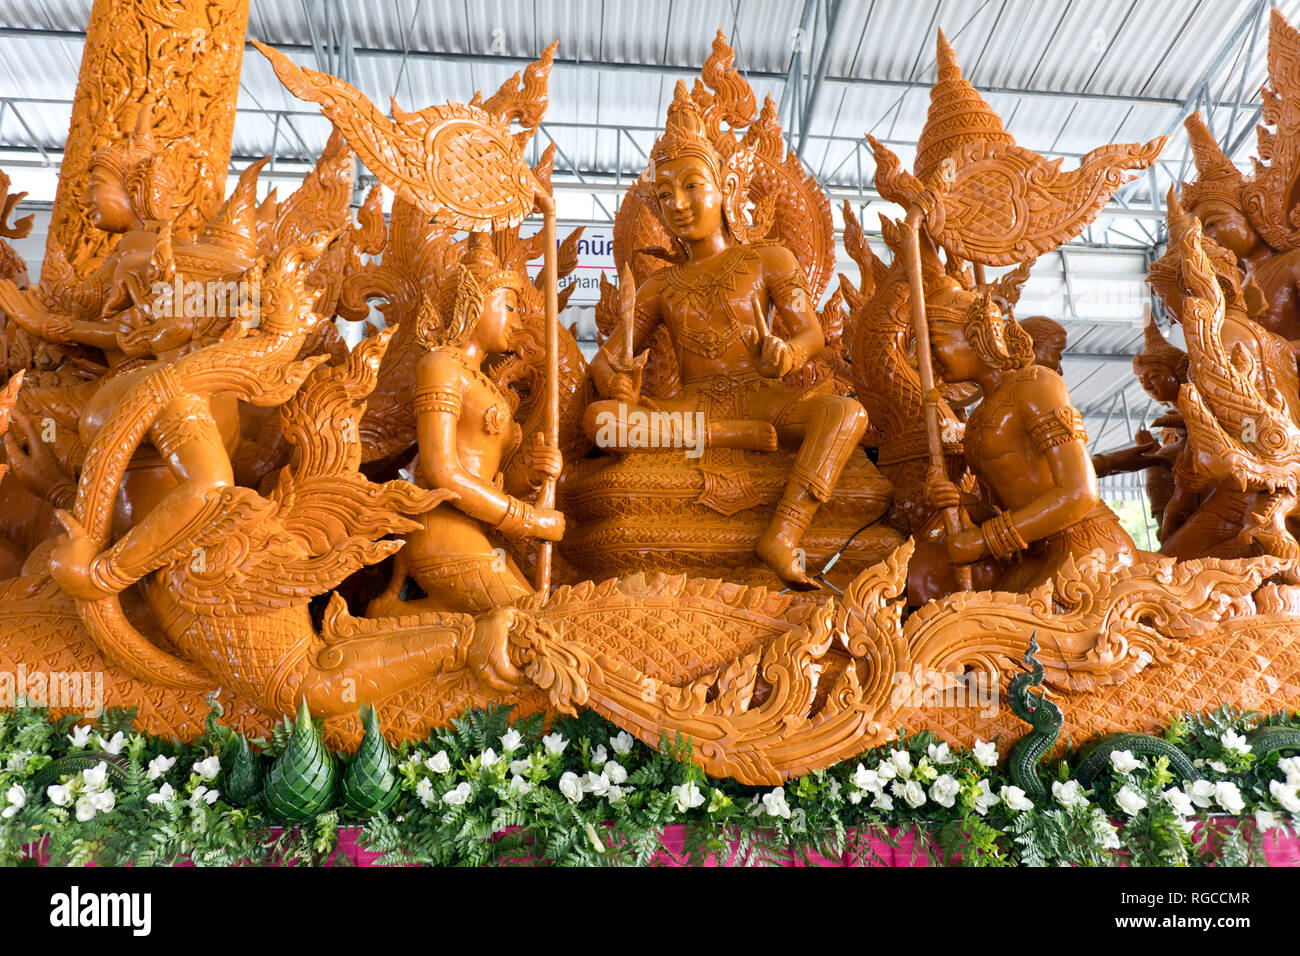 Thailand, Ubon Ratchathani Province, Candle Festival, wax works Stock Photo